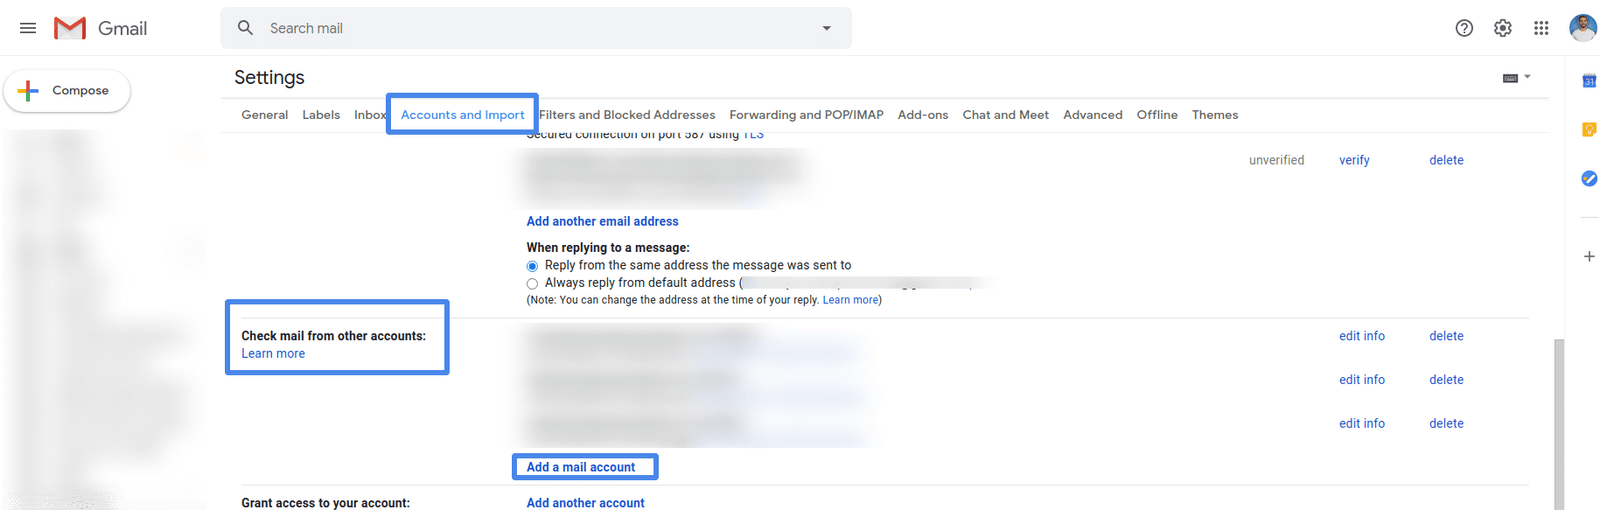 free custom email address gmail add account